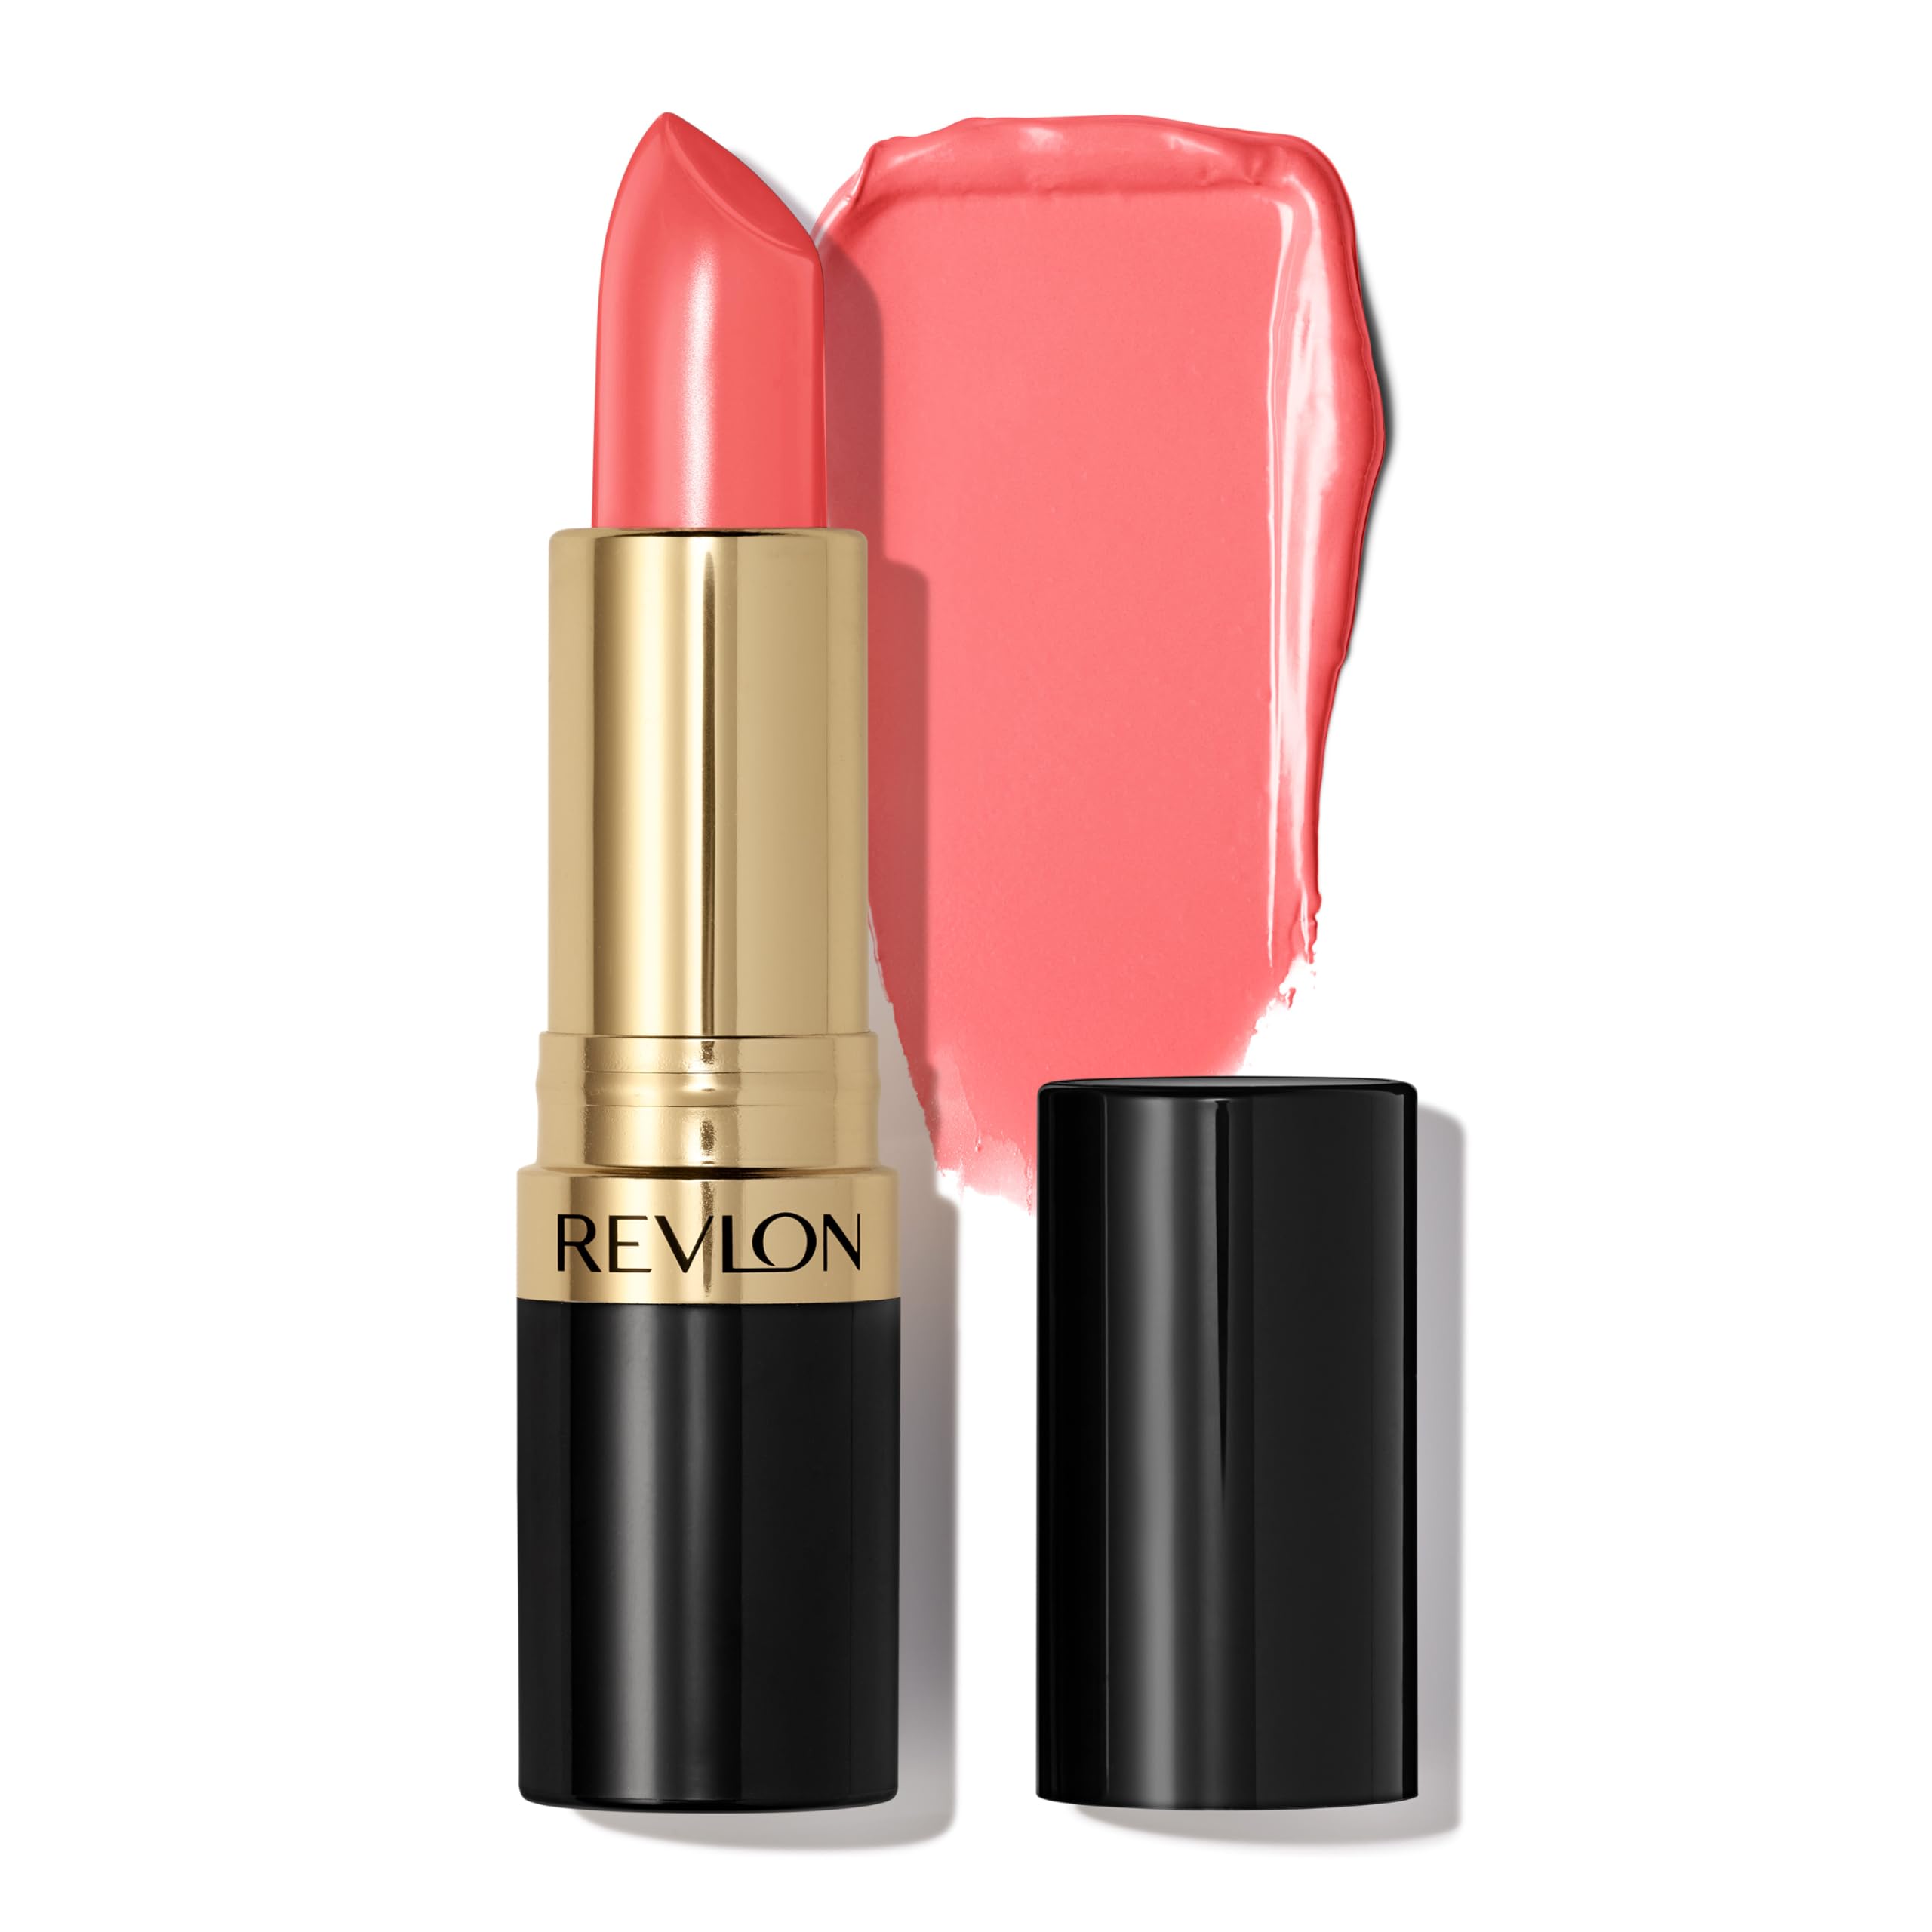 REVLON Super Lustrous Lipstick, Creamy Formula For Soft, Fuller-Looking Lips, Moisturized Feel, 807 Fire Peach, 0.15 oz